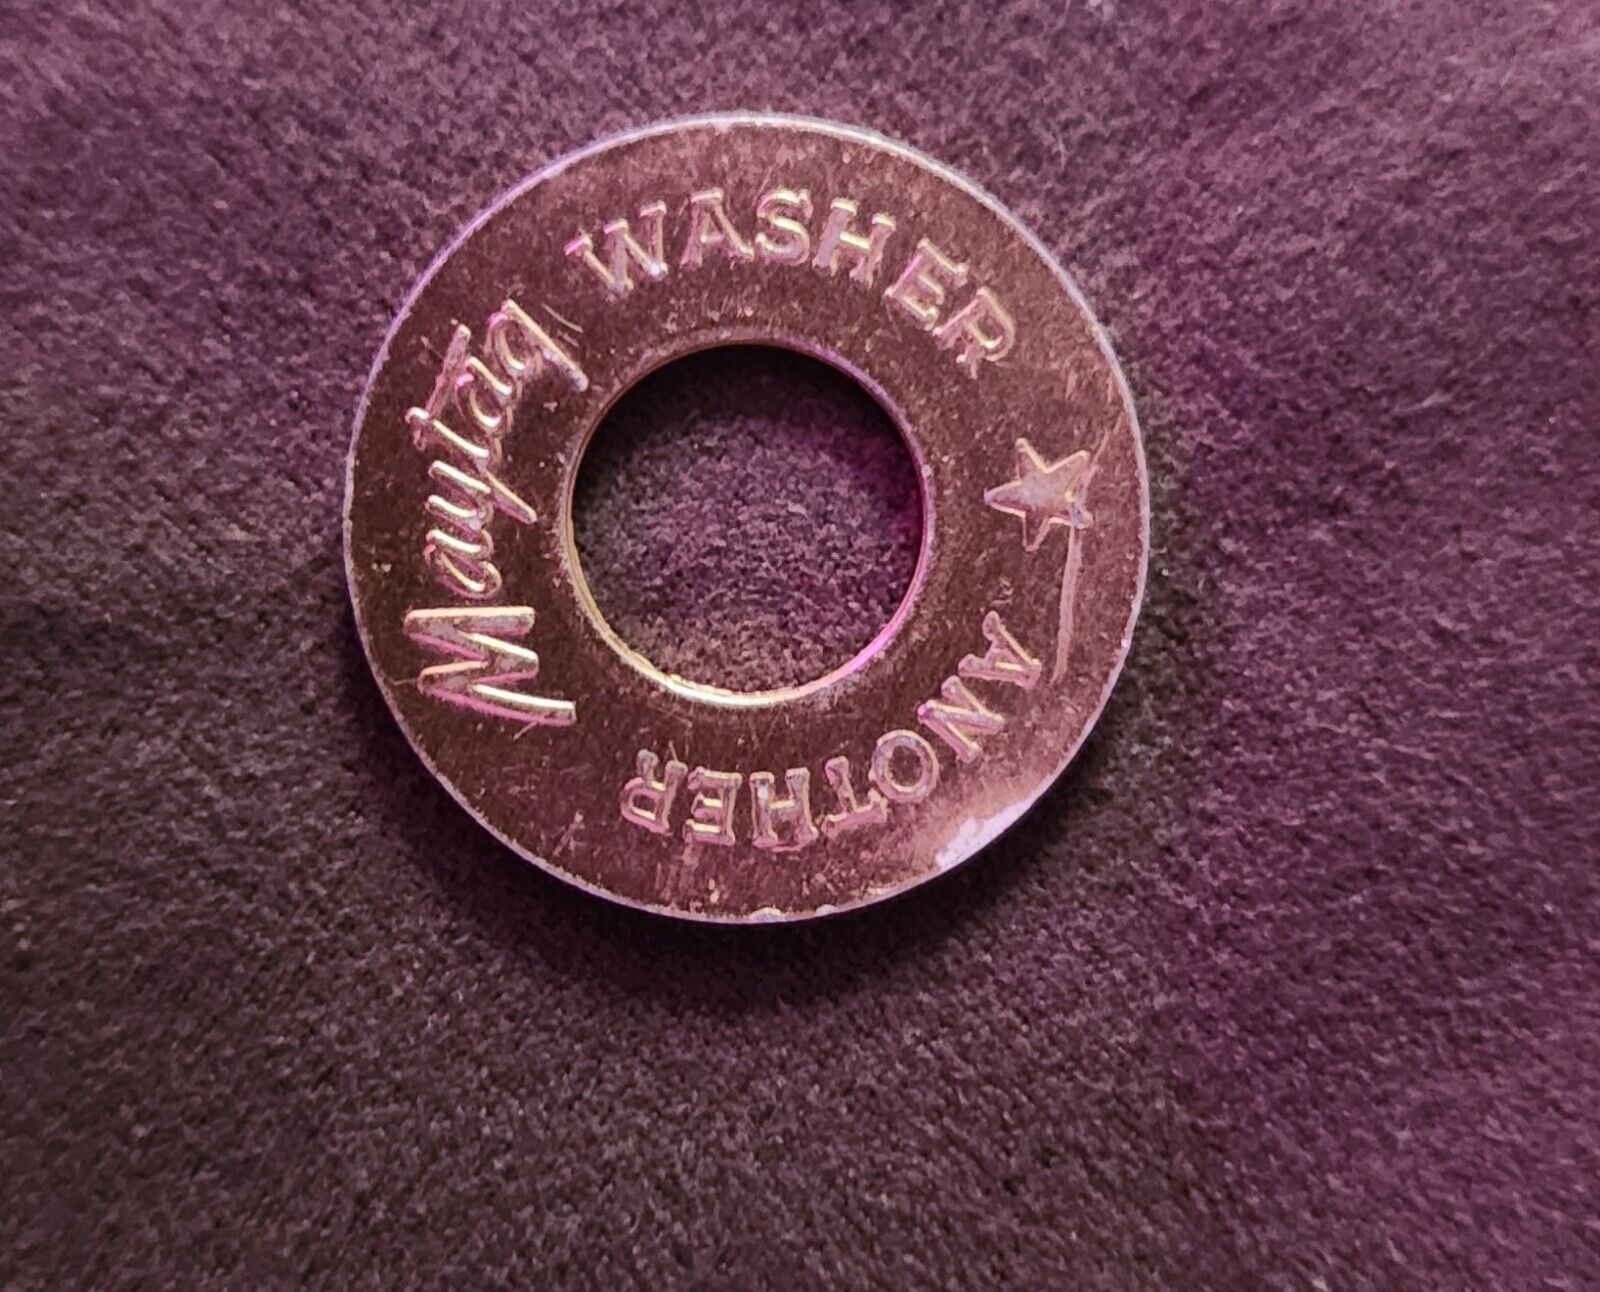 Maytag Washer Advertisement Washer \